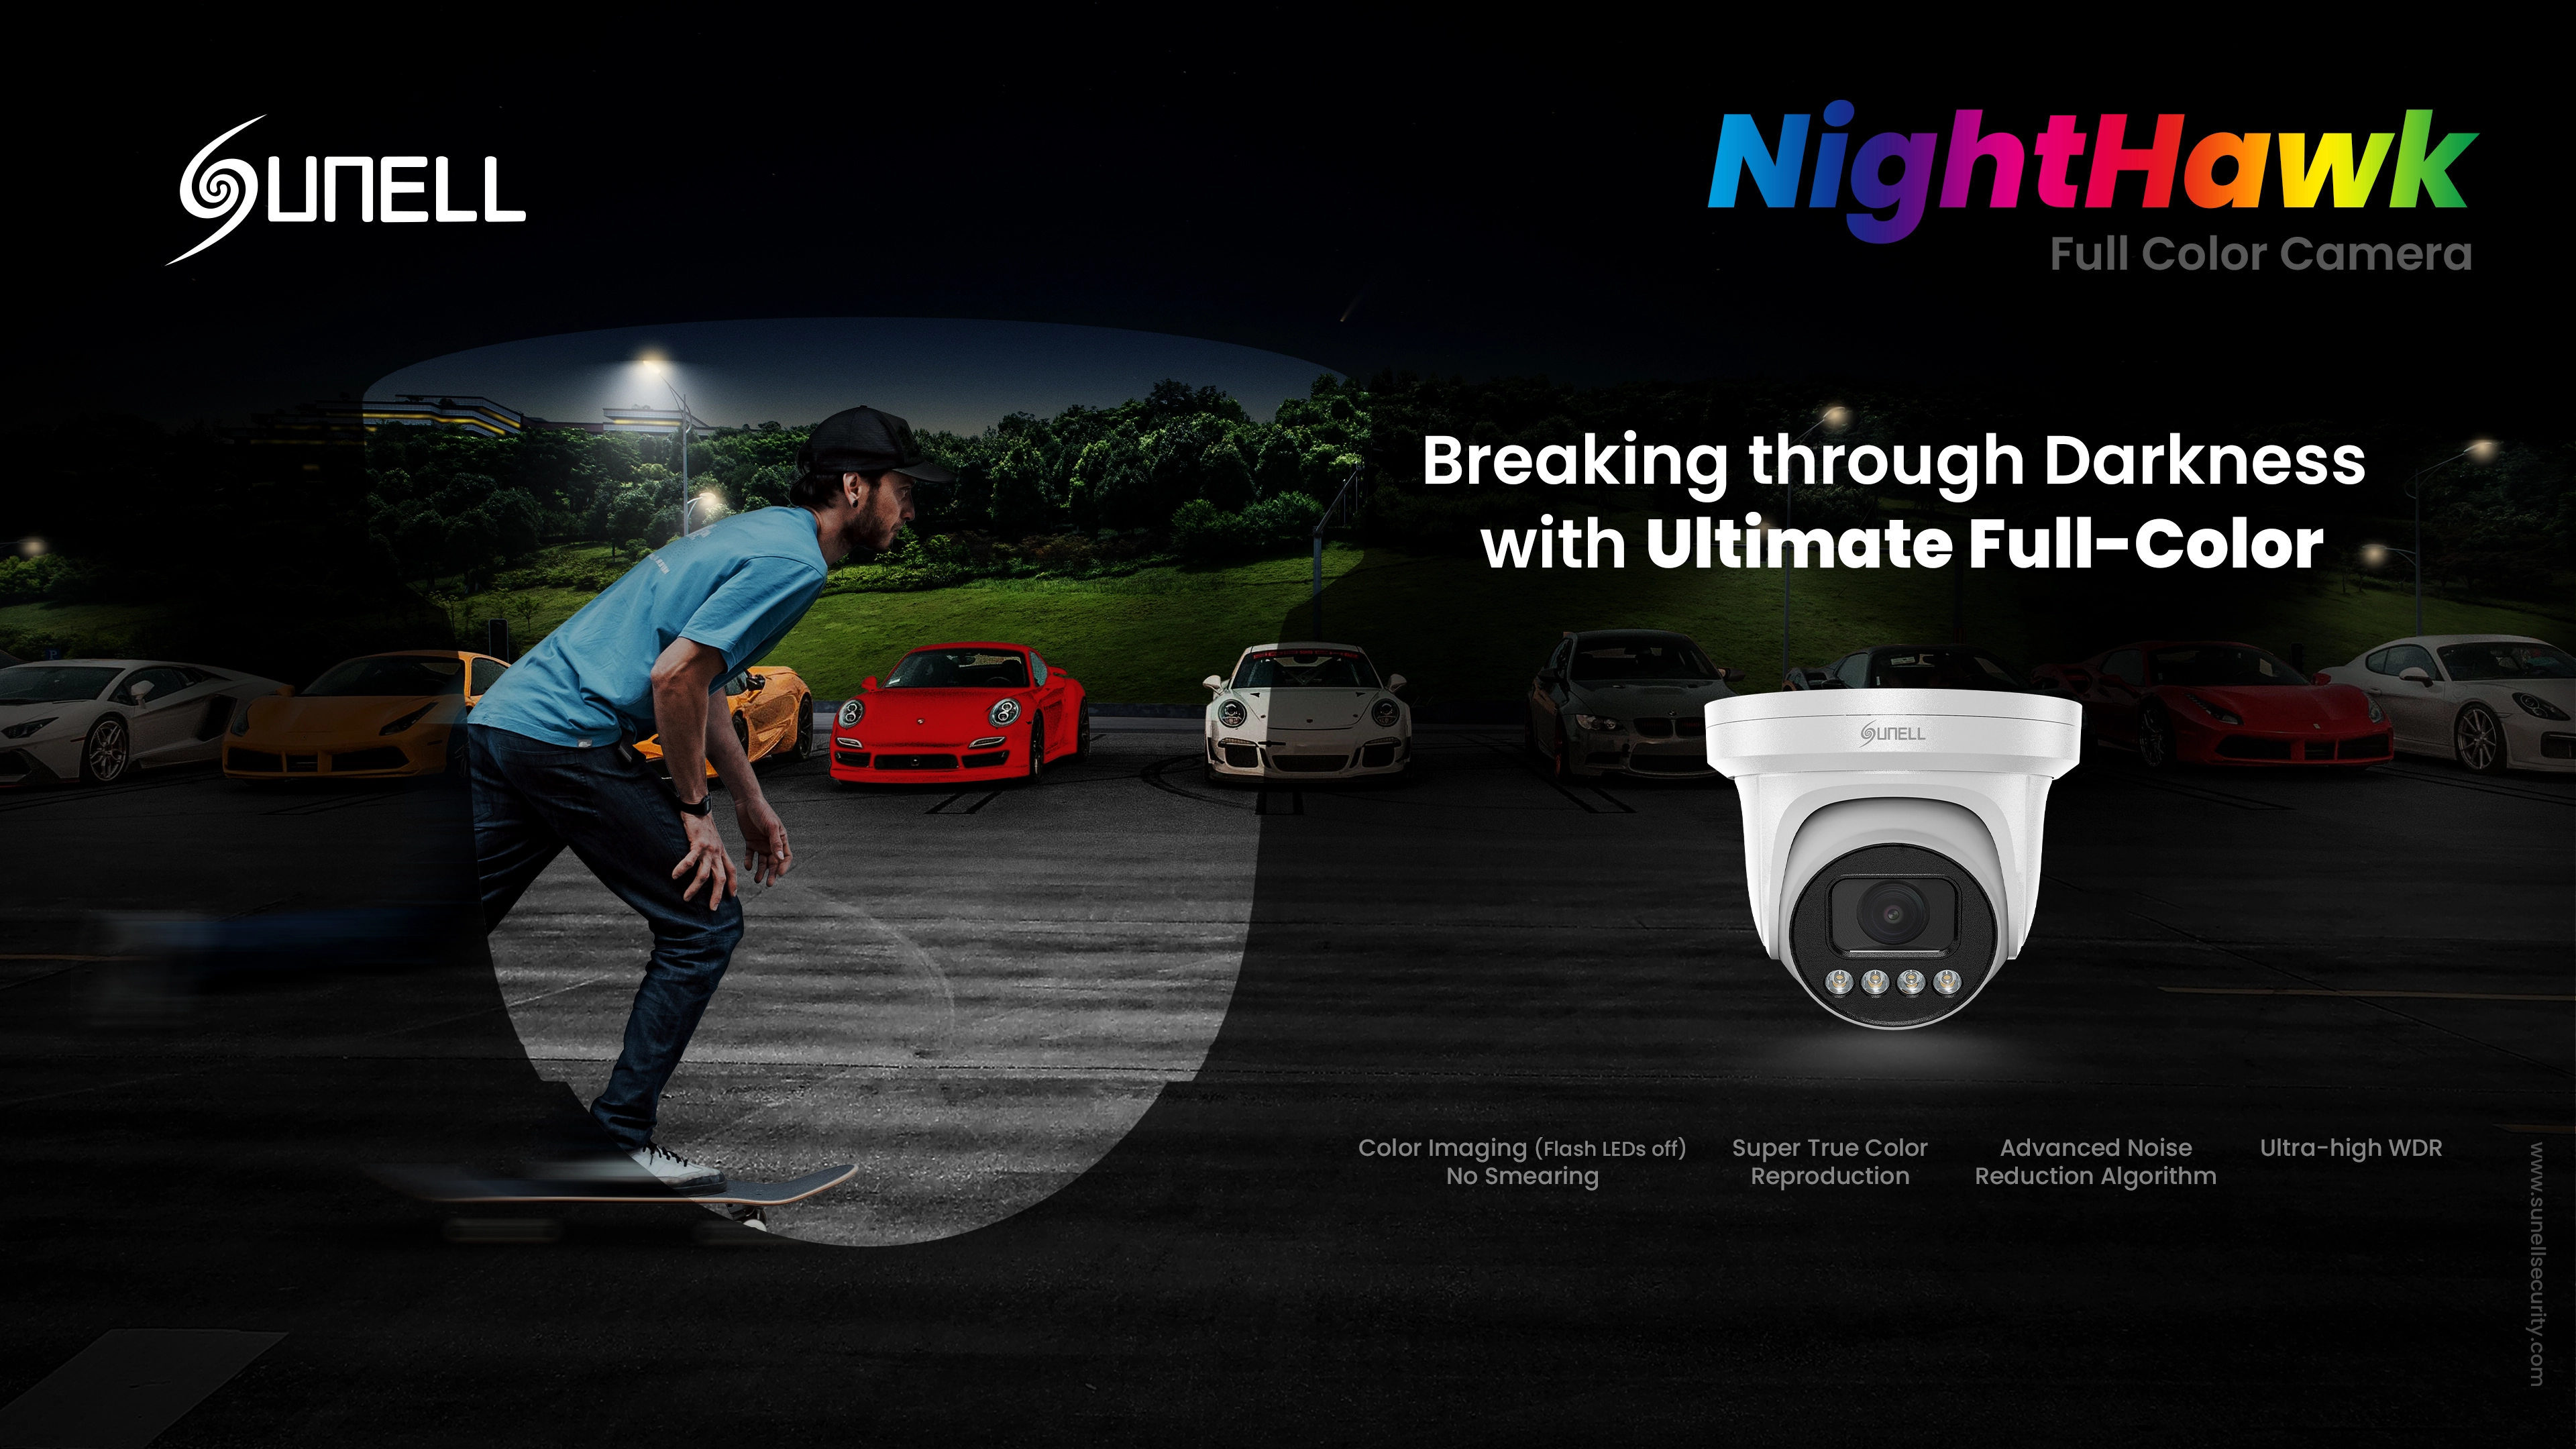 Night Hawk-Sunell Ultra-Low-Light Intelligent Full-Color Camera is Coming - 翻译中...